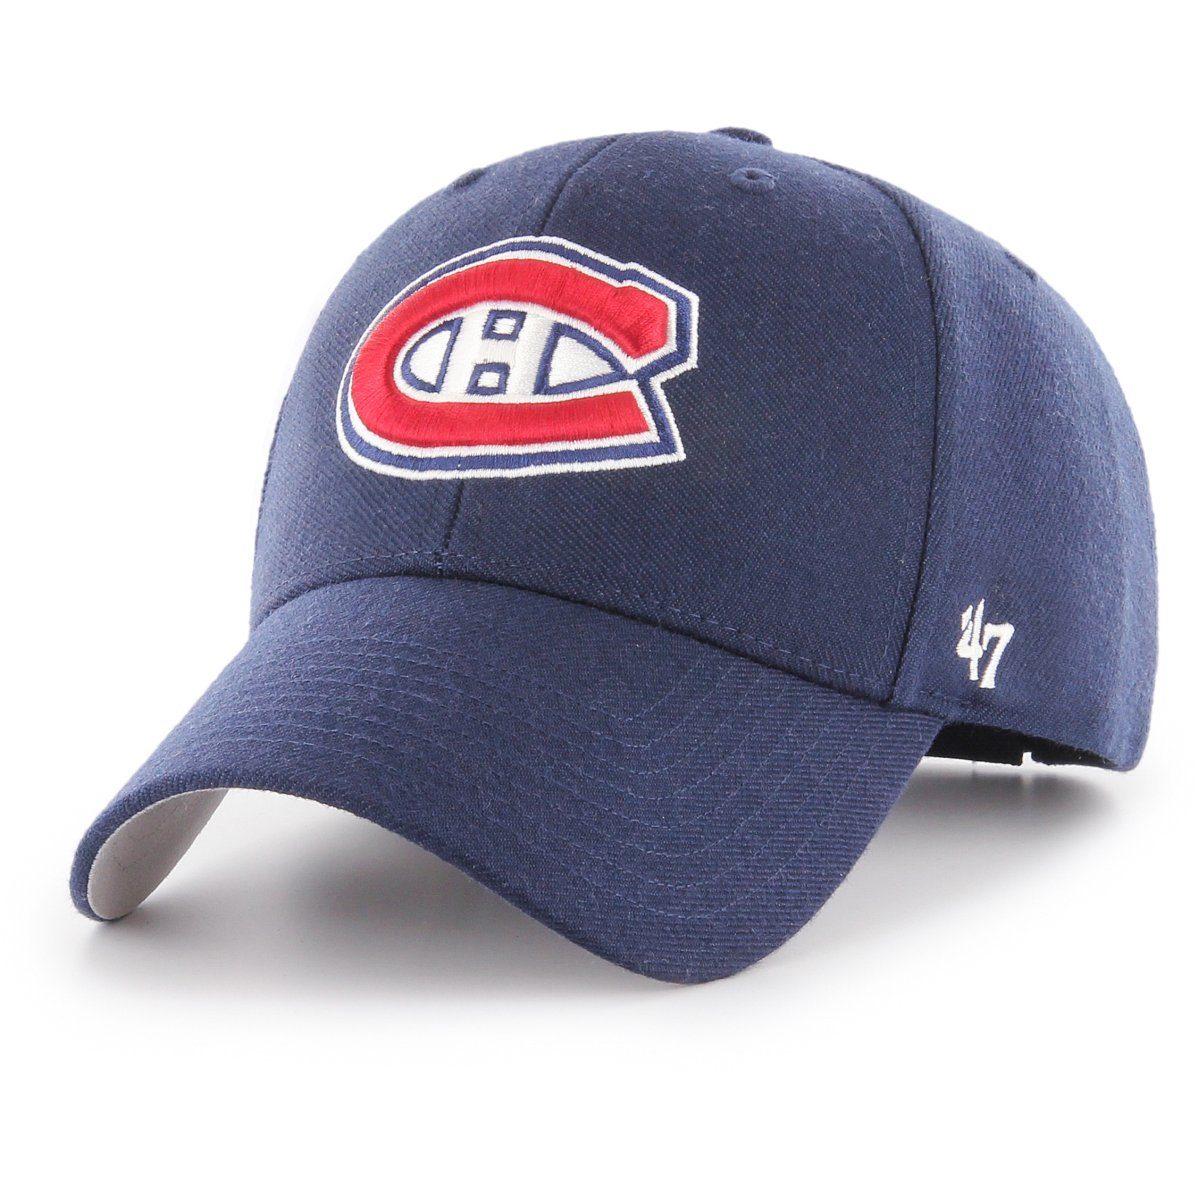 '47 Brand Baseball Cap NHL Montreal Canadians